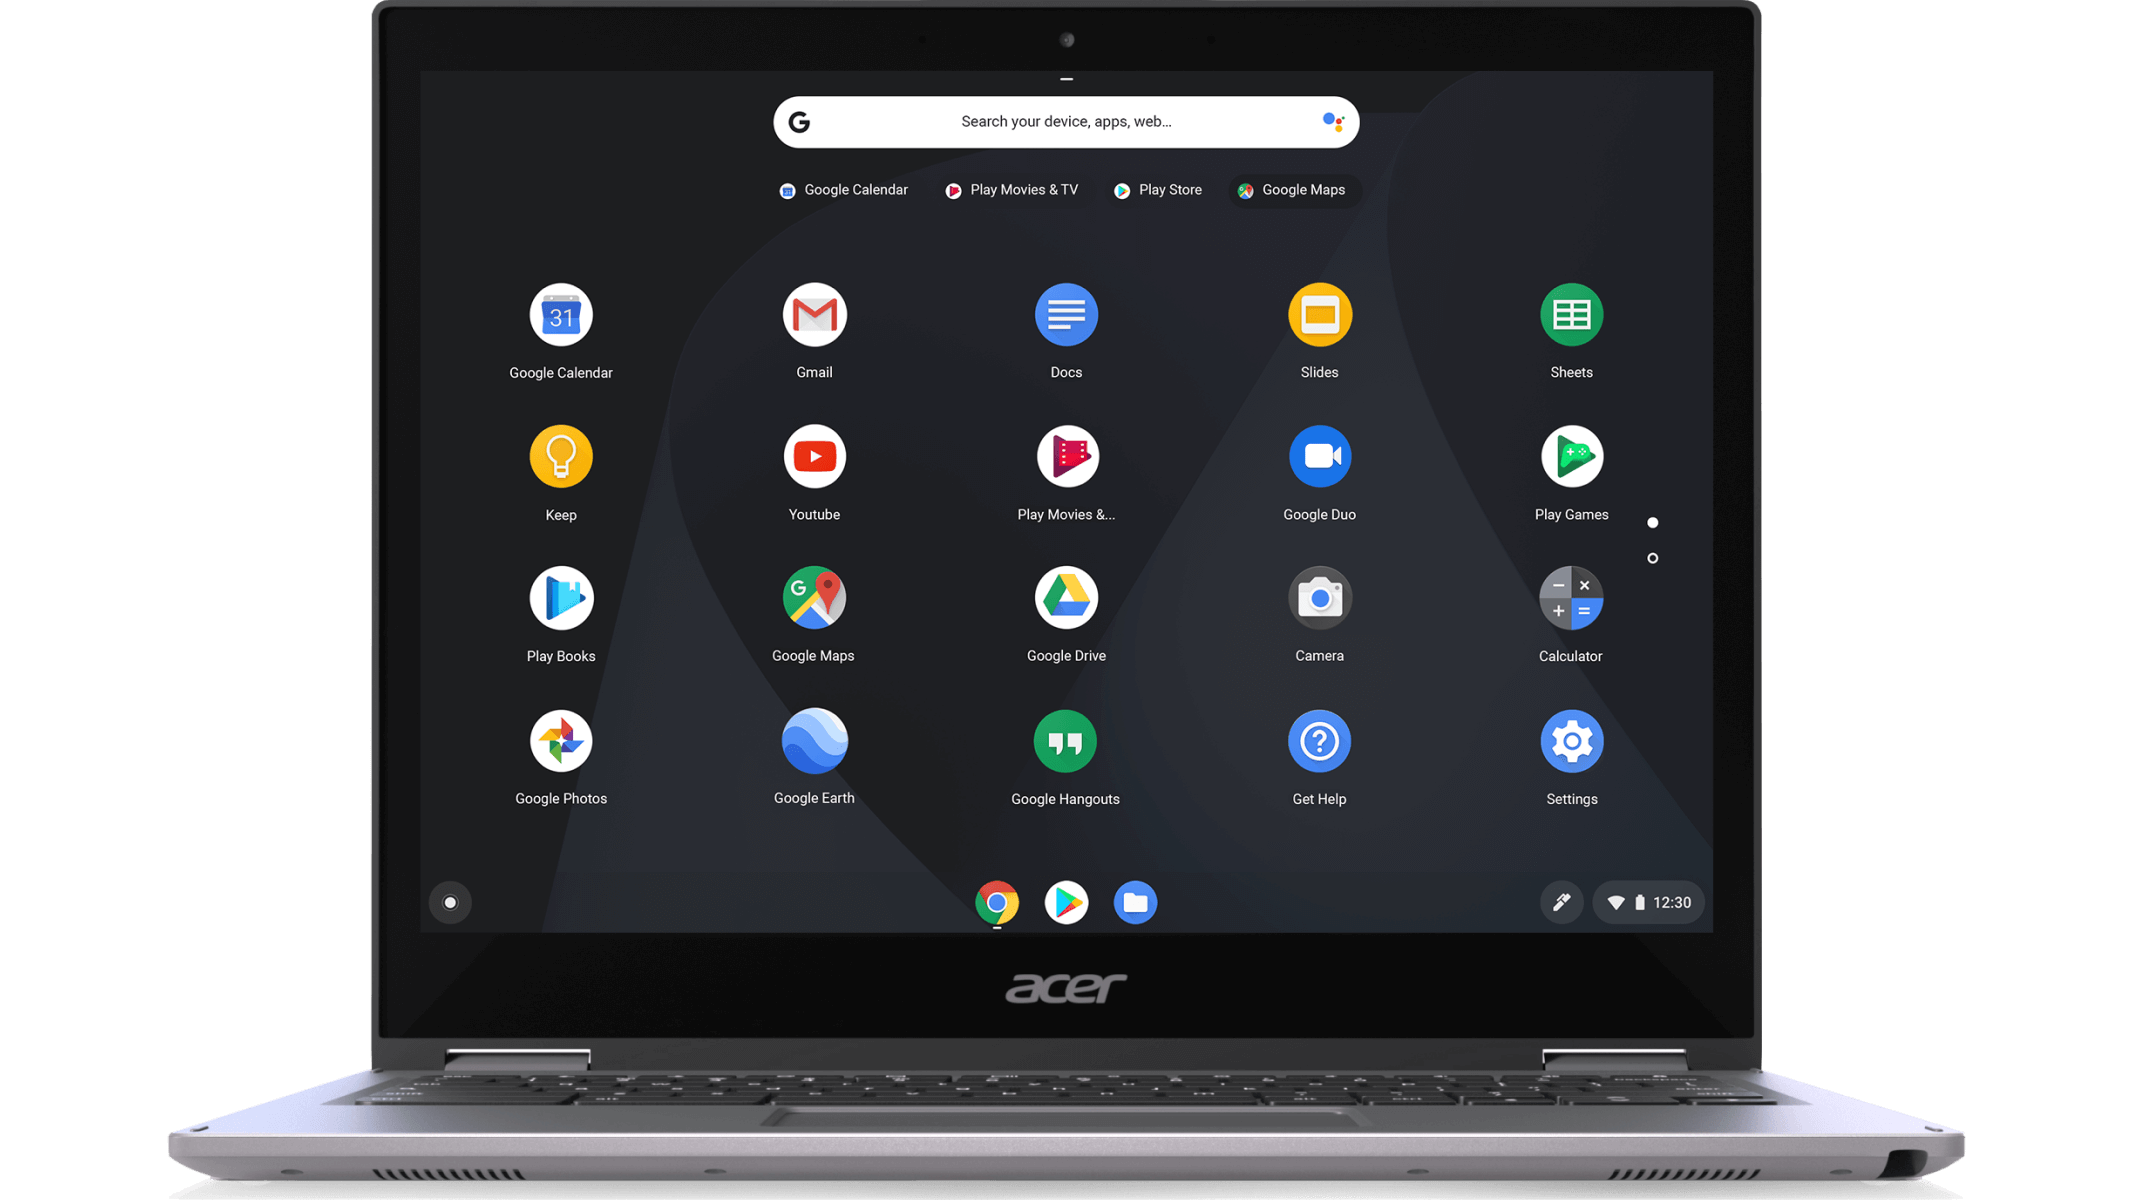 Chromebook Google